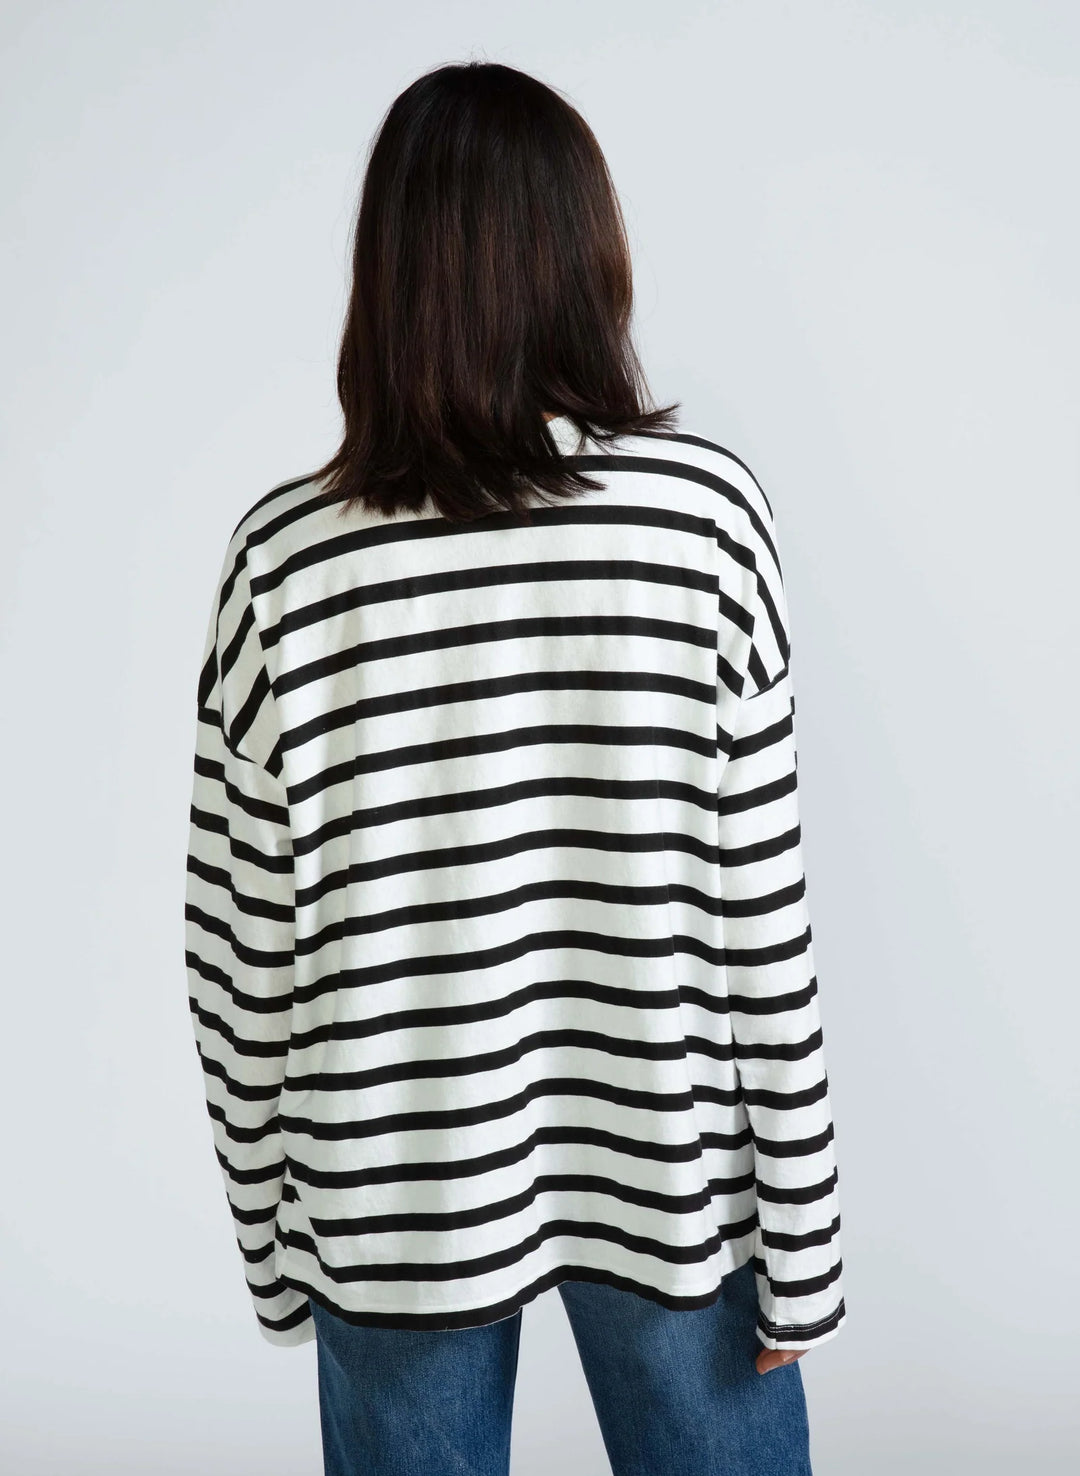 ASKK NY – Printed Long Sleeve Tee in Thin White Stripe